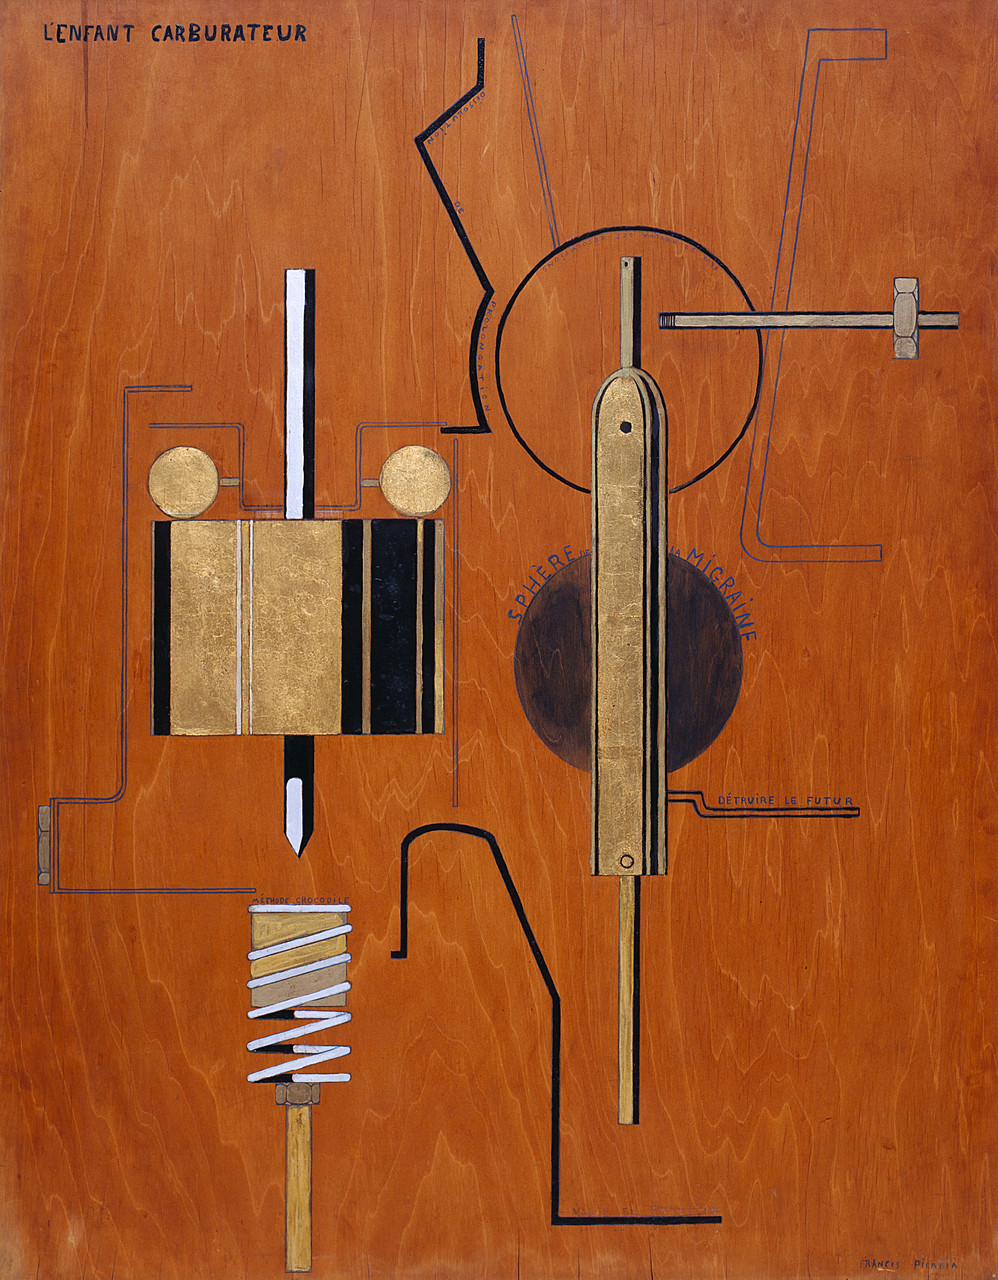 Francis Picabia - The Child Carburetor.jpg